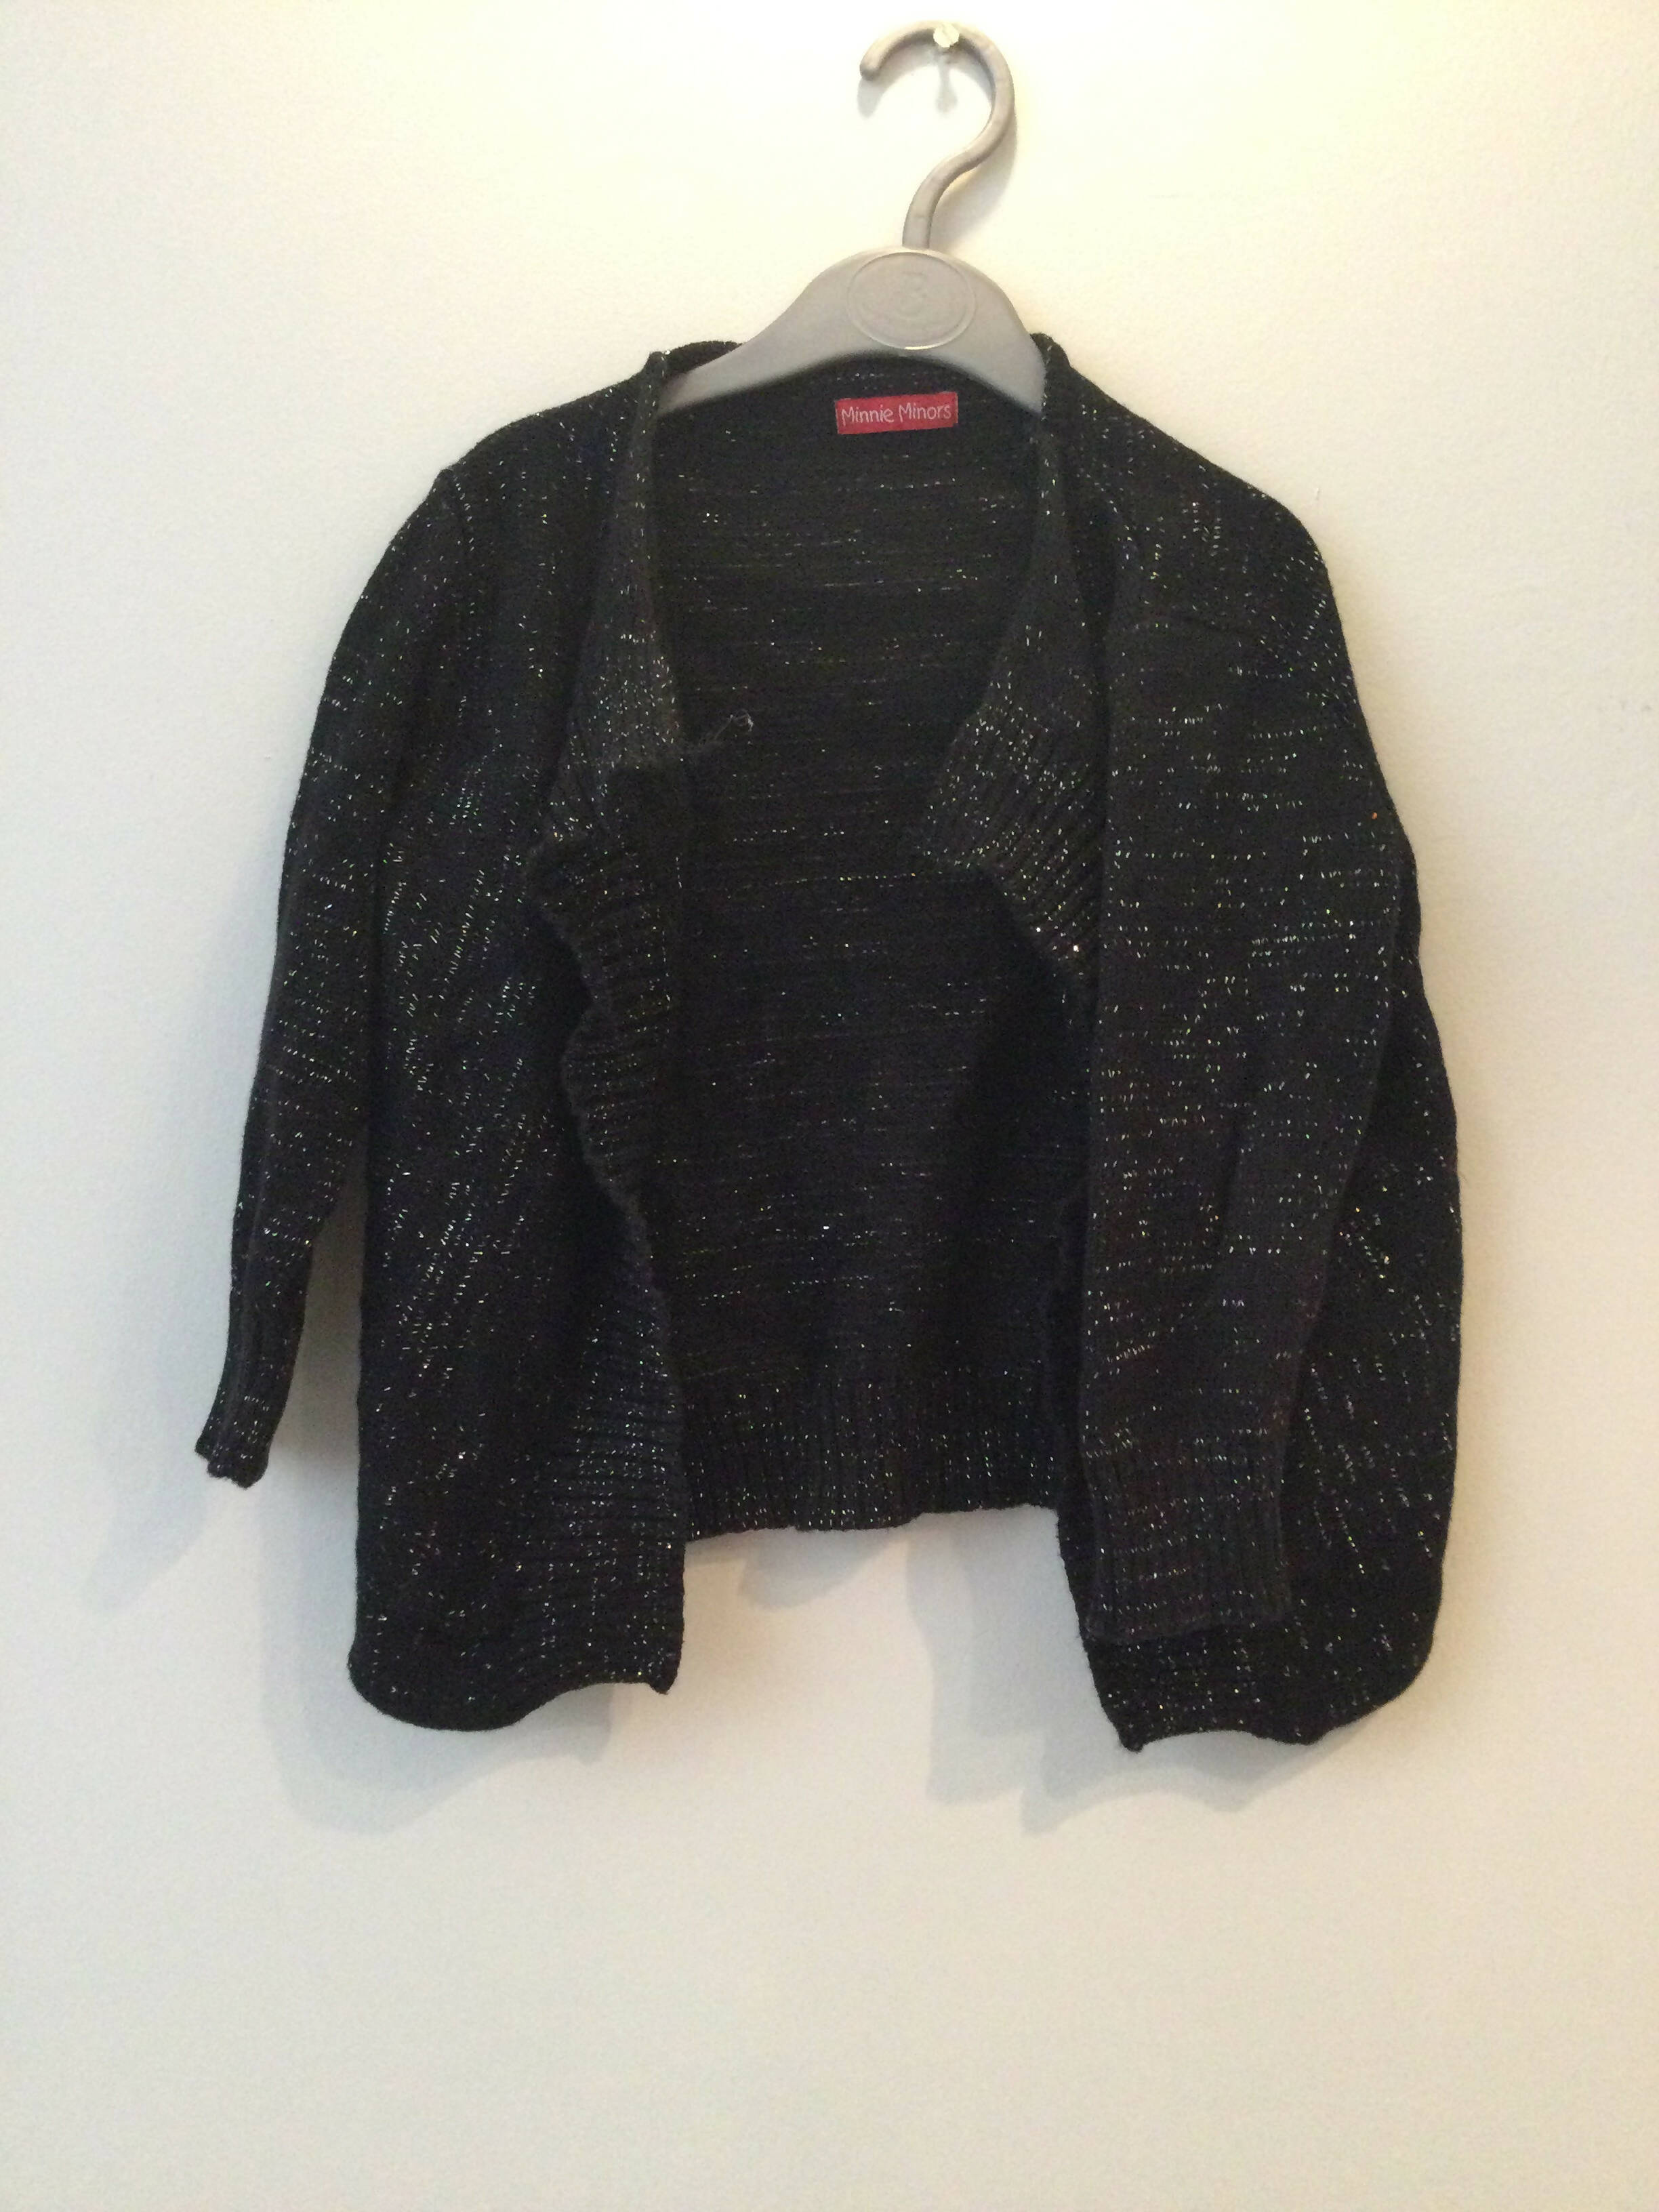 Minnie Minors | Black glitter sweater (24-36 months) | Girls Tops & Shirts | Preloved